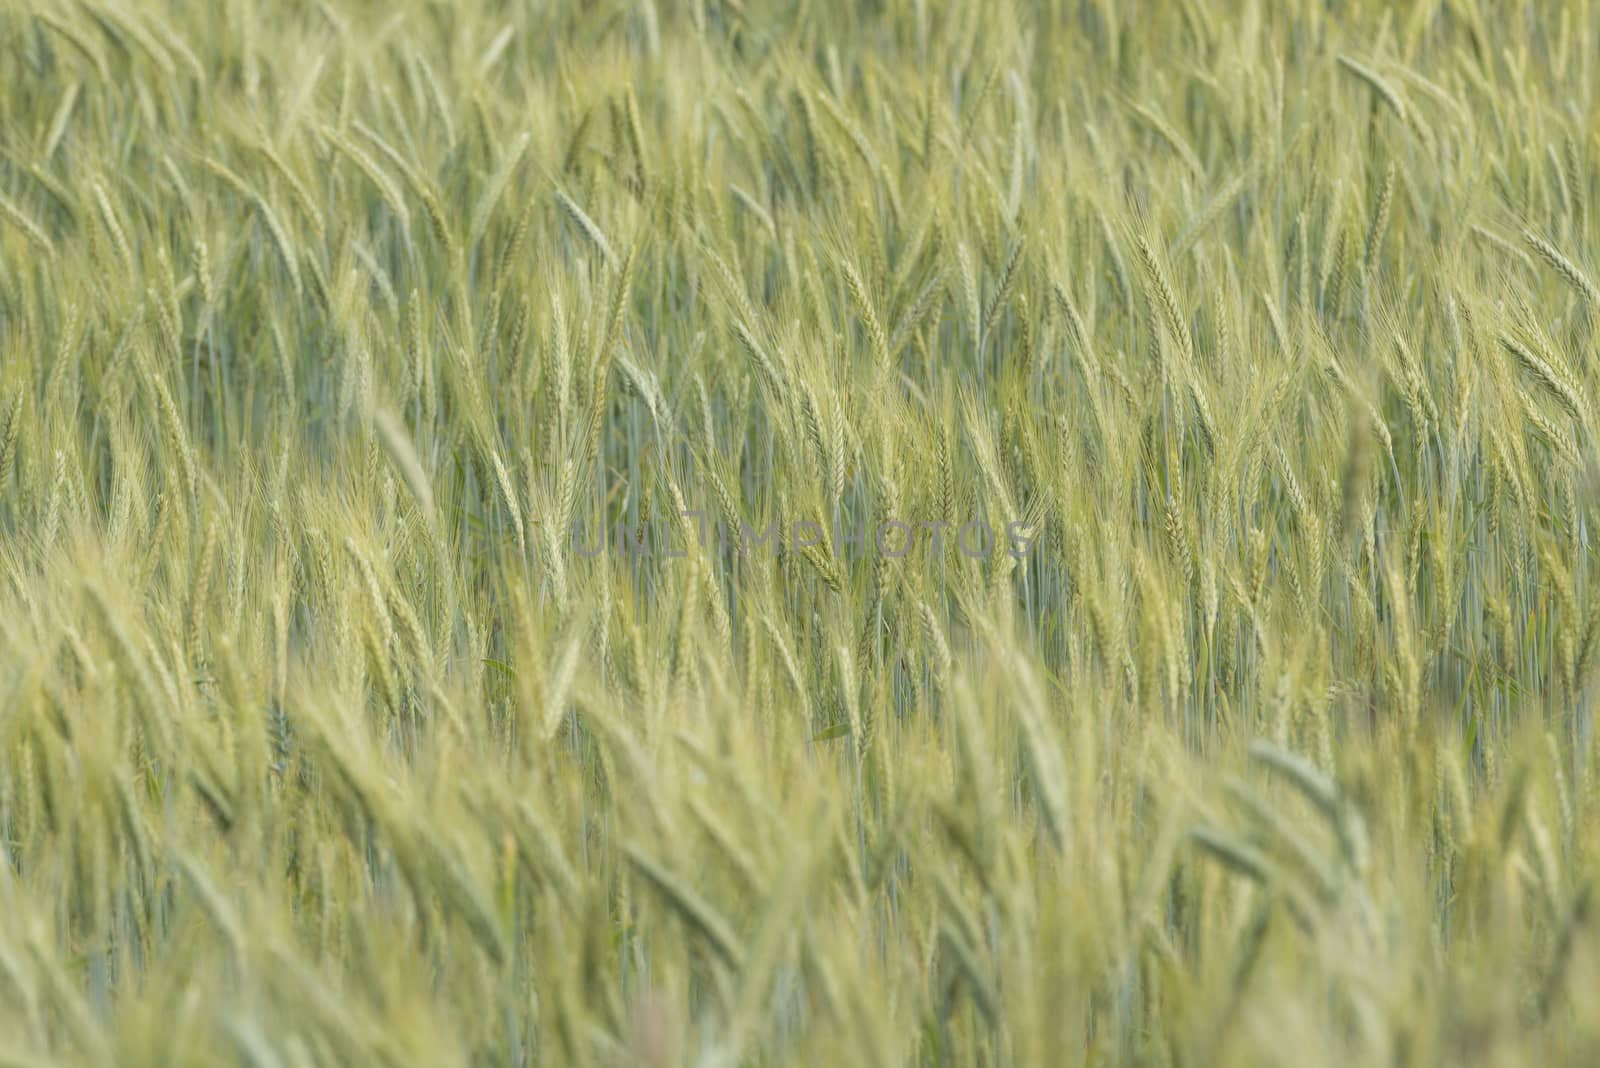 Rye field in the Netherlands
 by Tofotografie